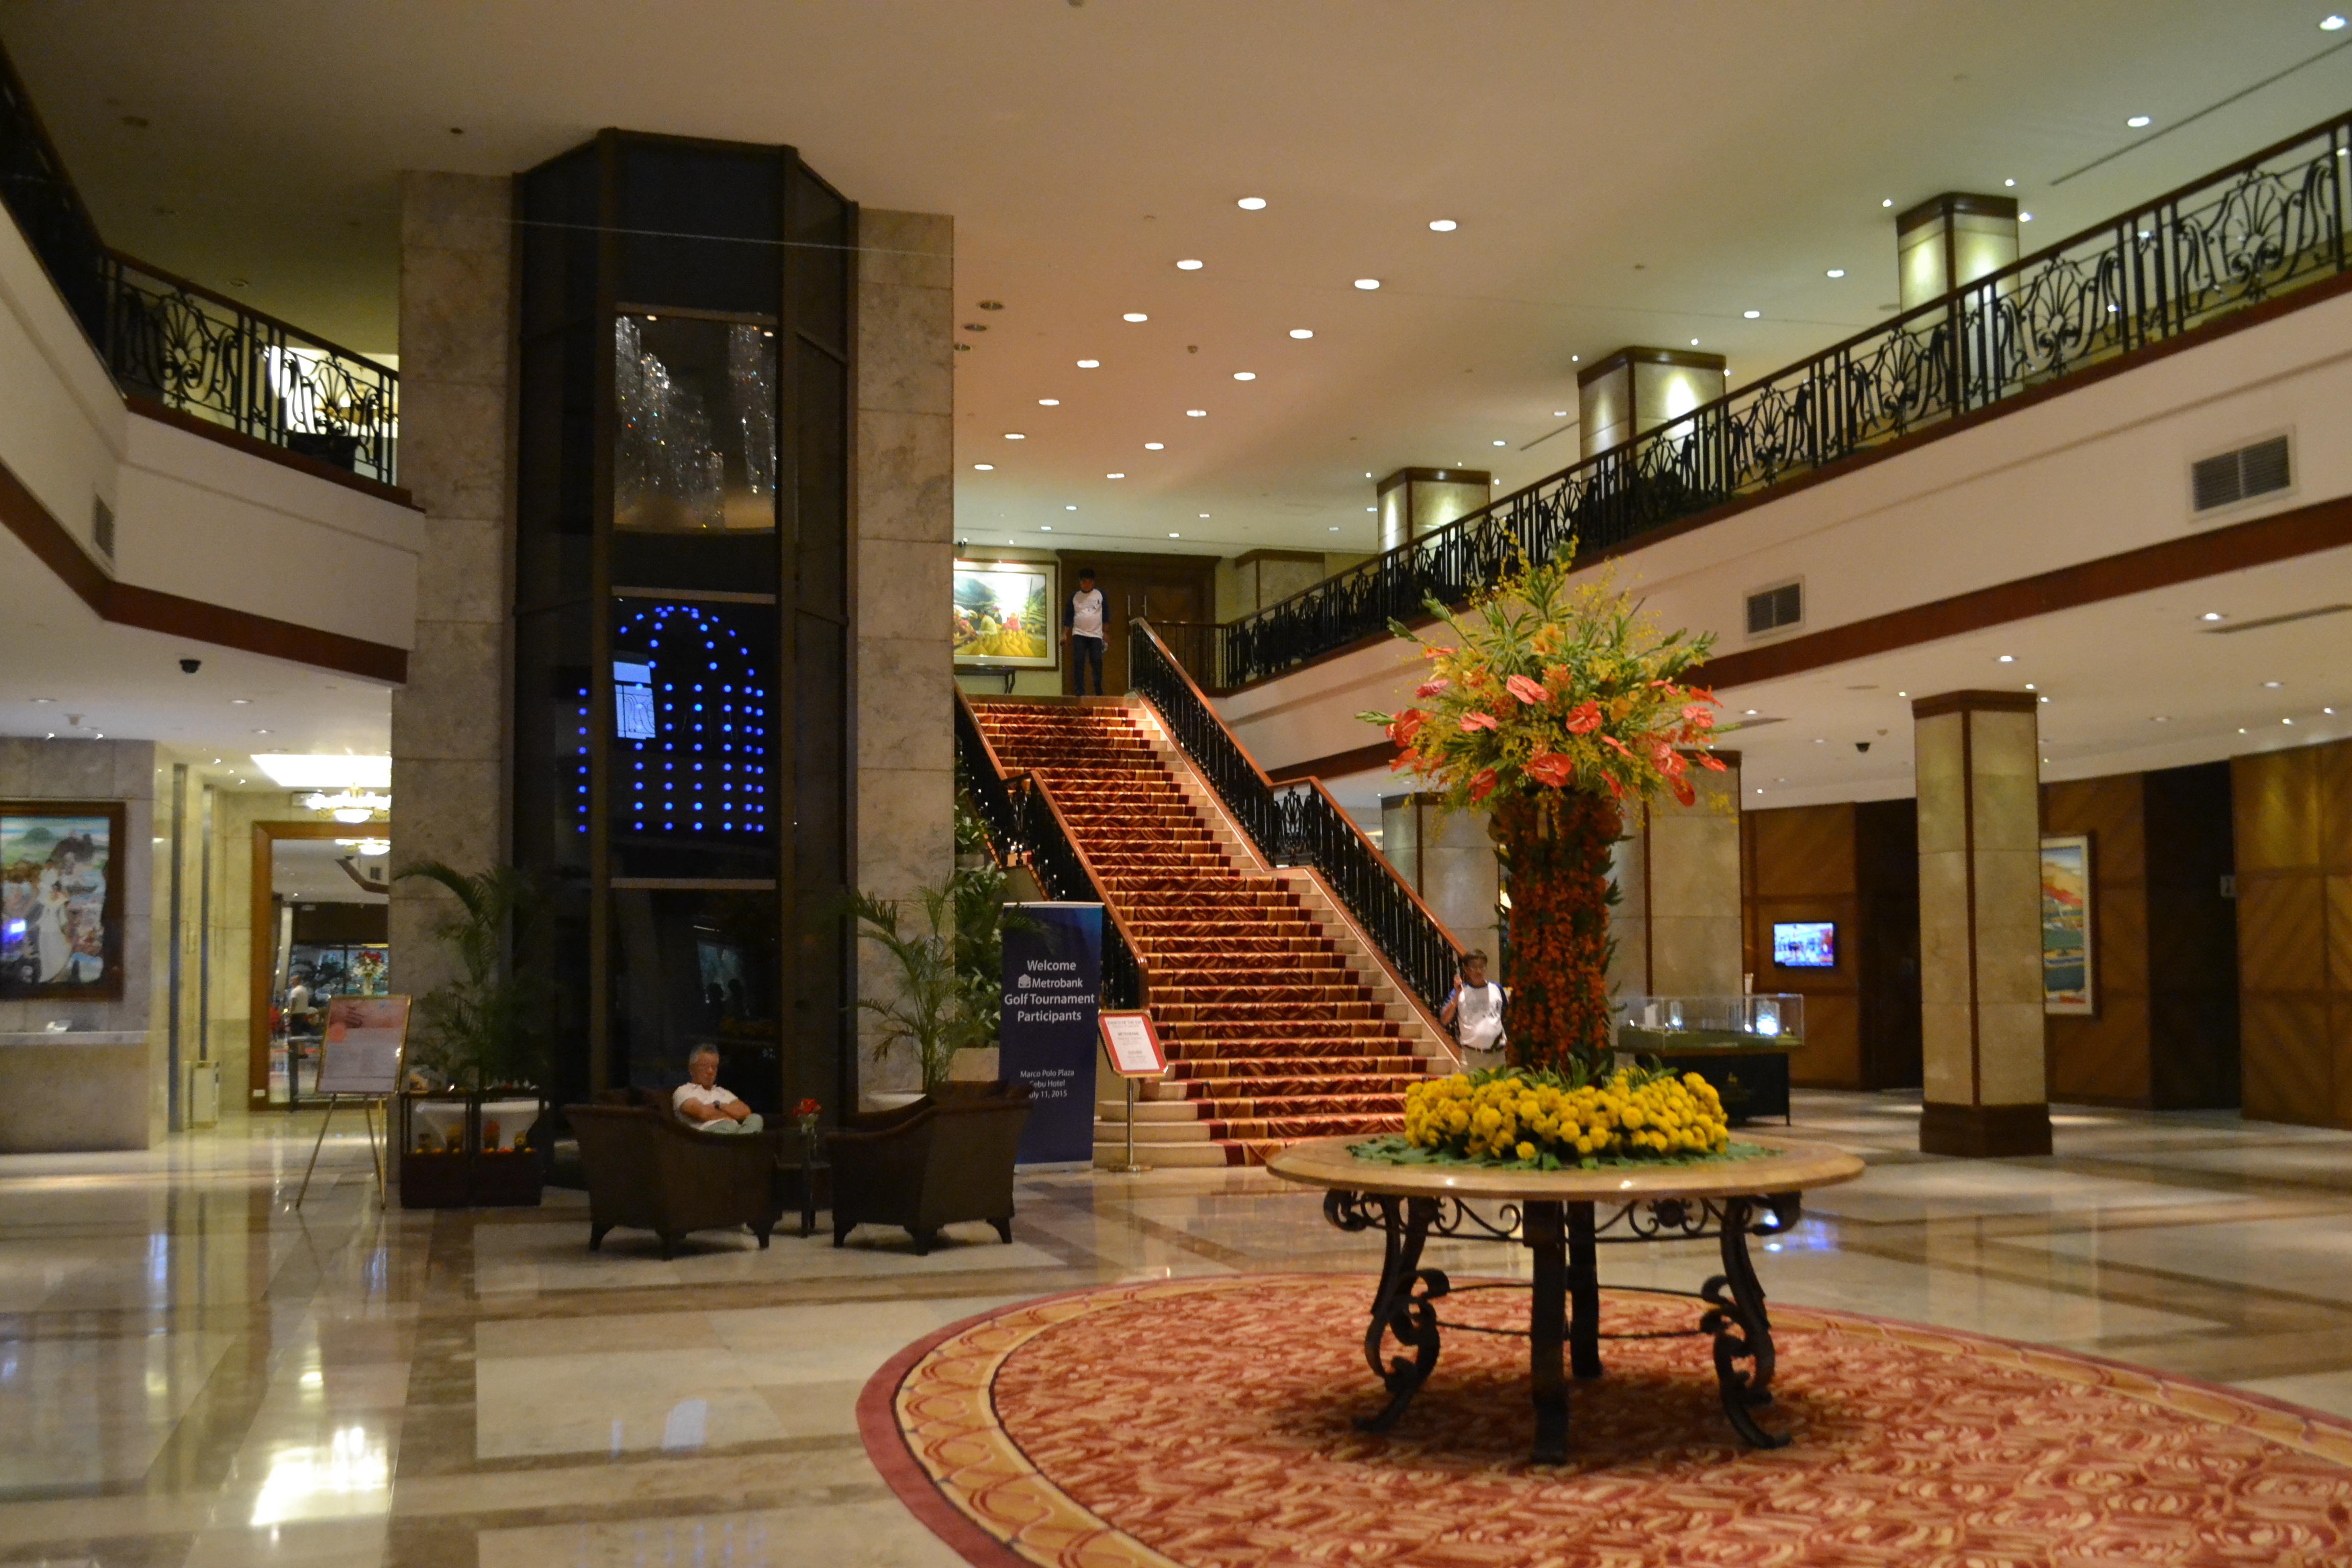 The lobby and its palatial feeling. [photo credit: Keita]